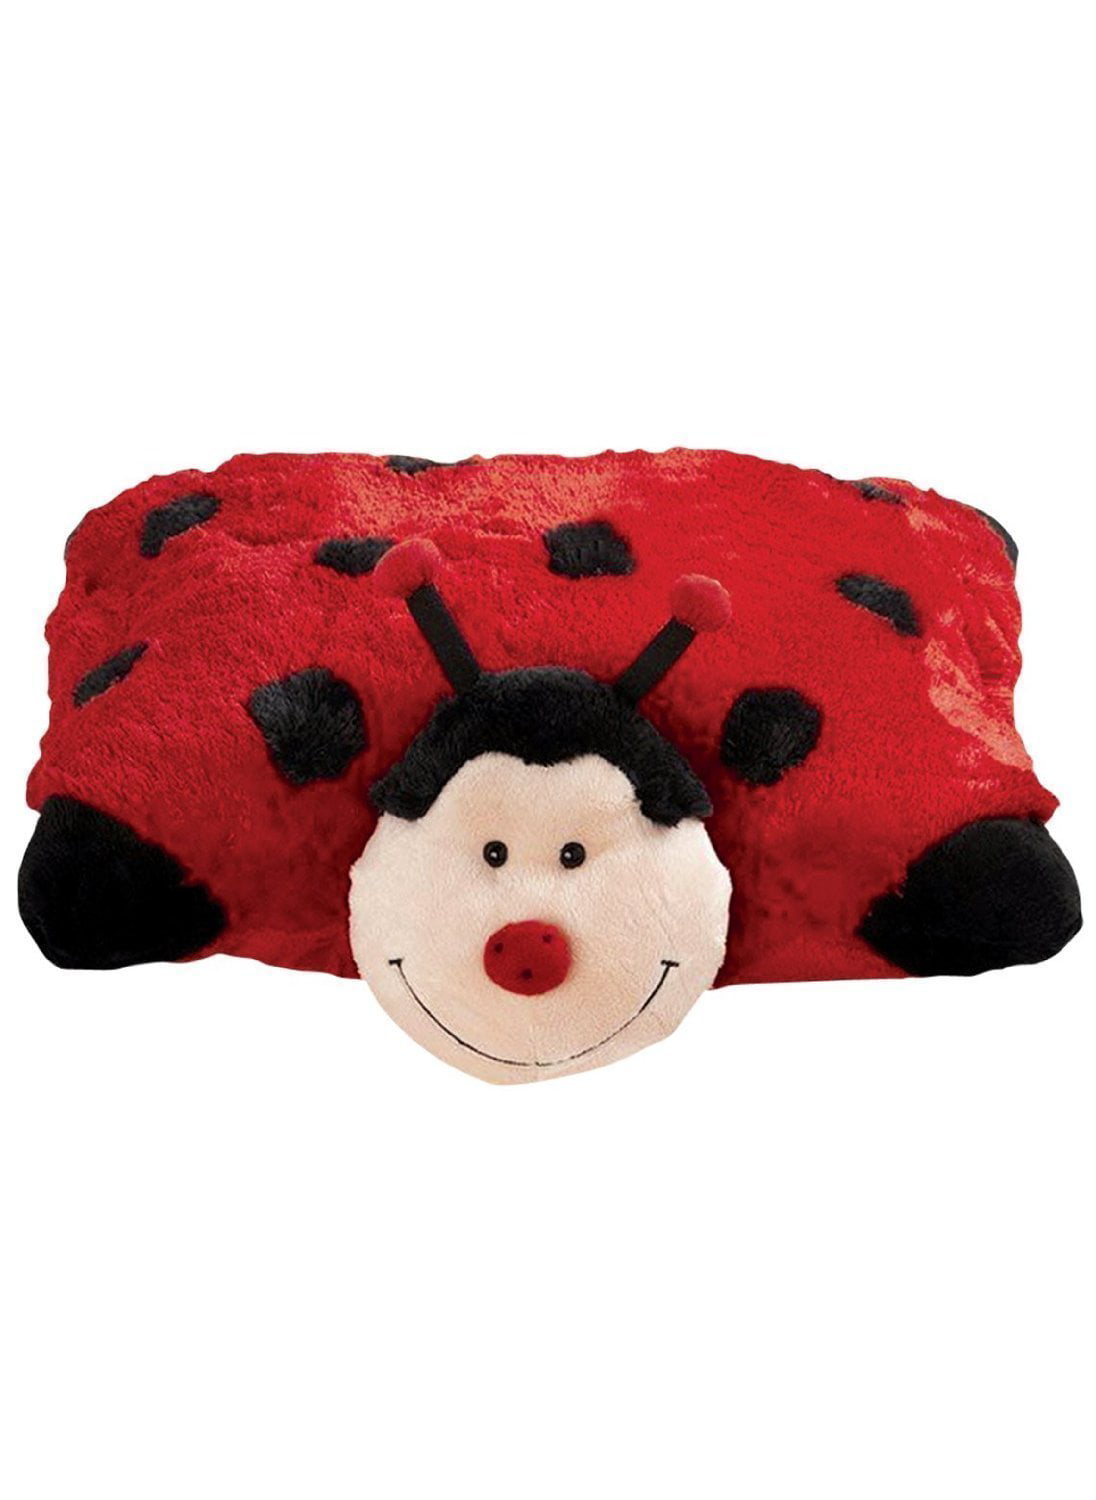 mini ladybug pillow pet